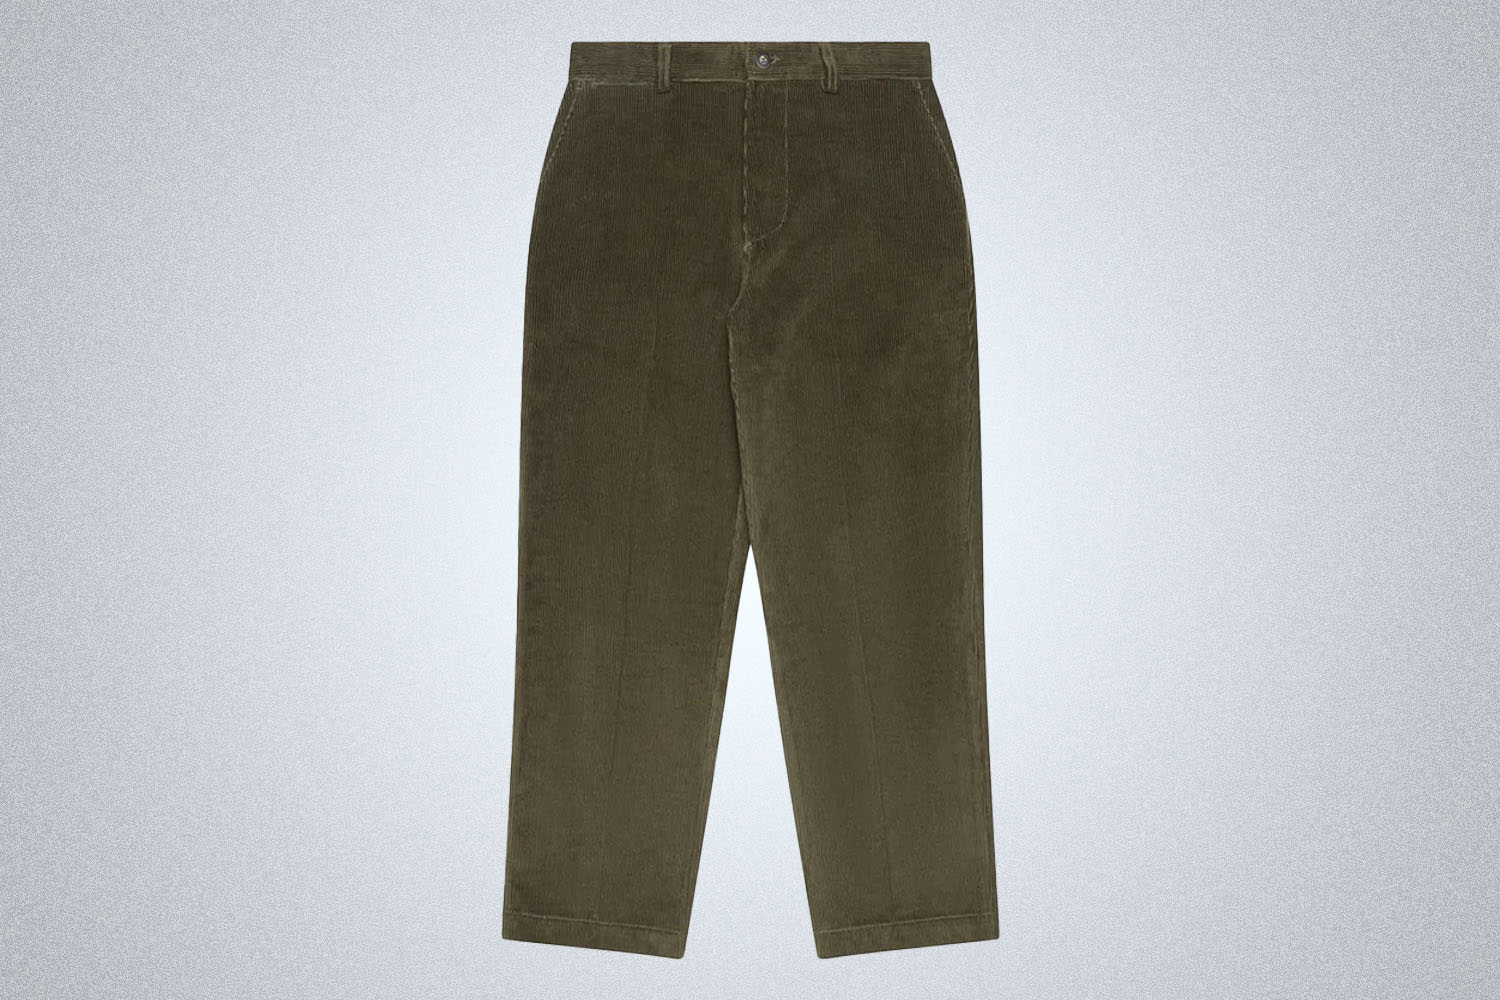 a pair of greeen Knickerbocker corduroy pants on a grey background